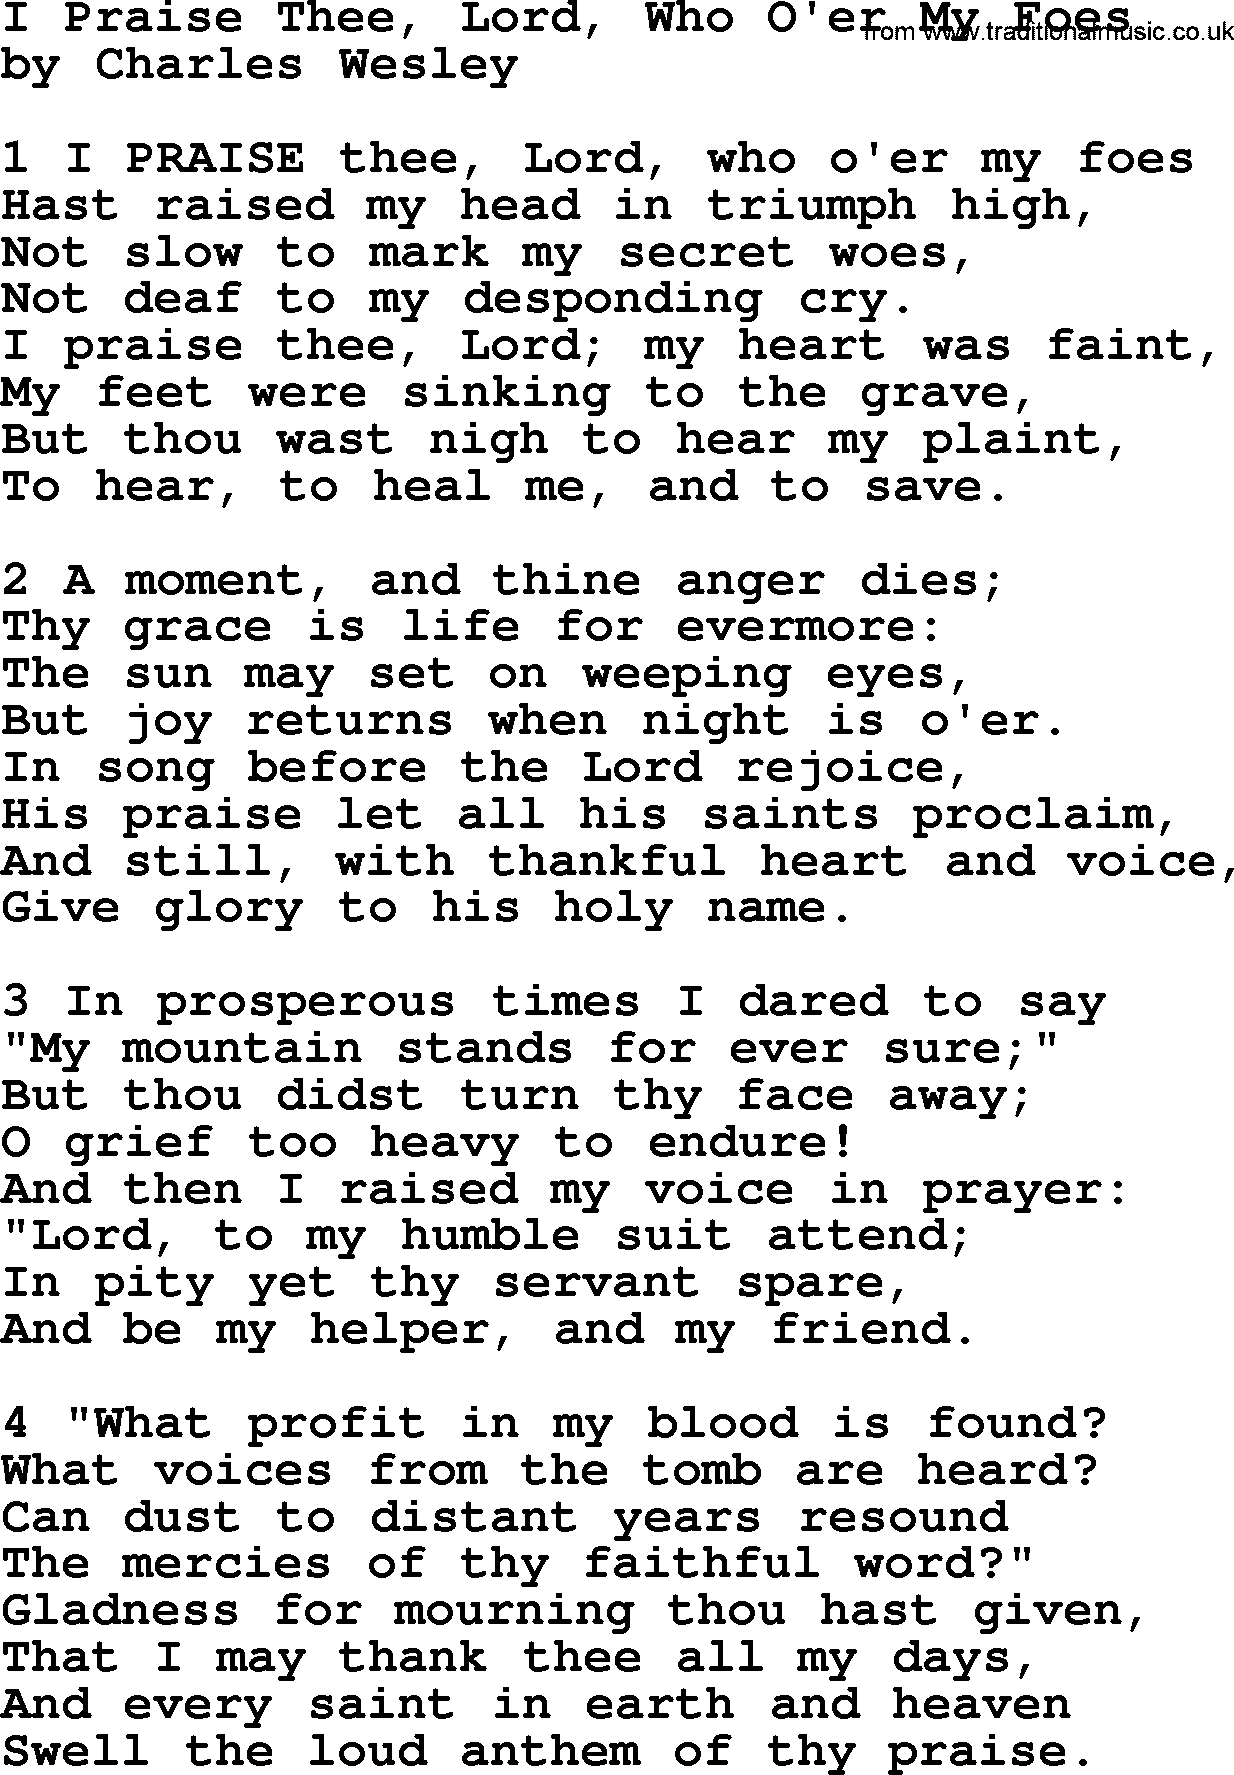 Charles Wesley hymn: I Praise Thee, Lord, Who O'er My Foes, lyrics